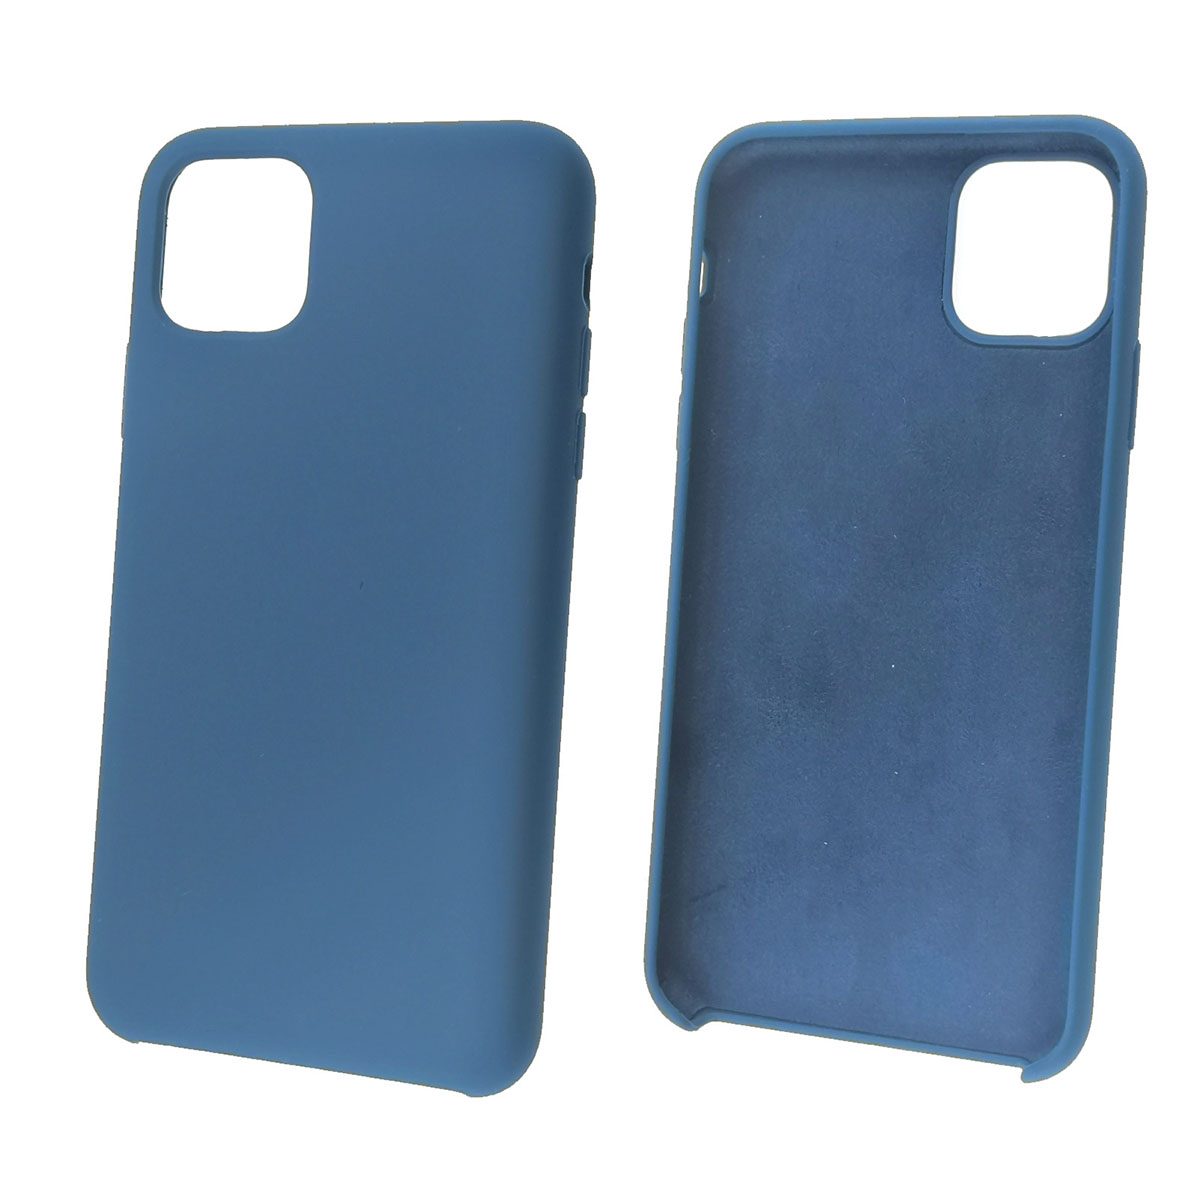 Чехол накладка Silicon Case для APPLE iPhone 11 Pro MAX 2019, силикон, бархат, цвет синий.